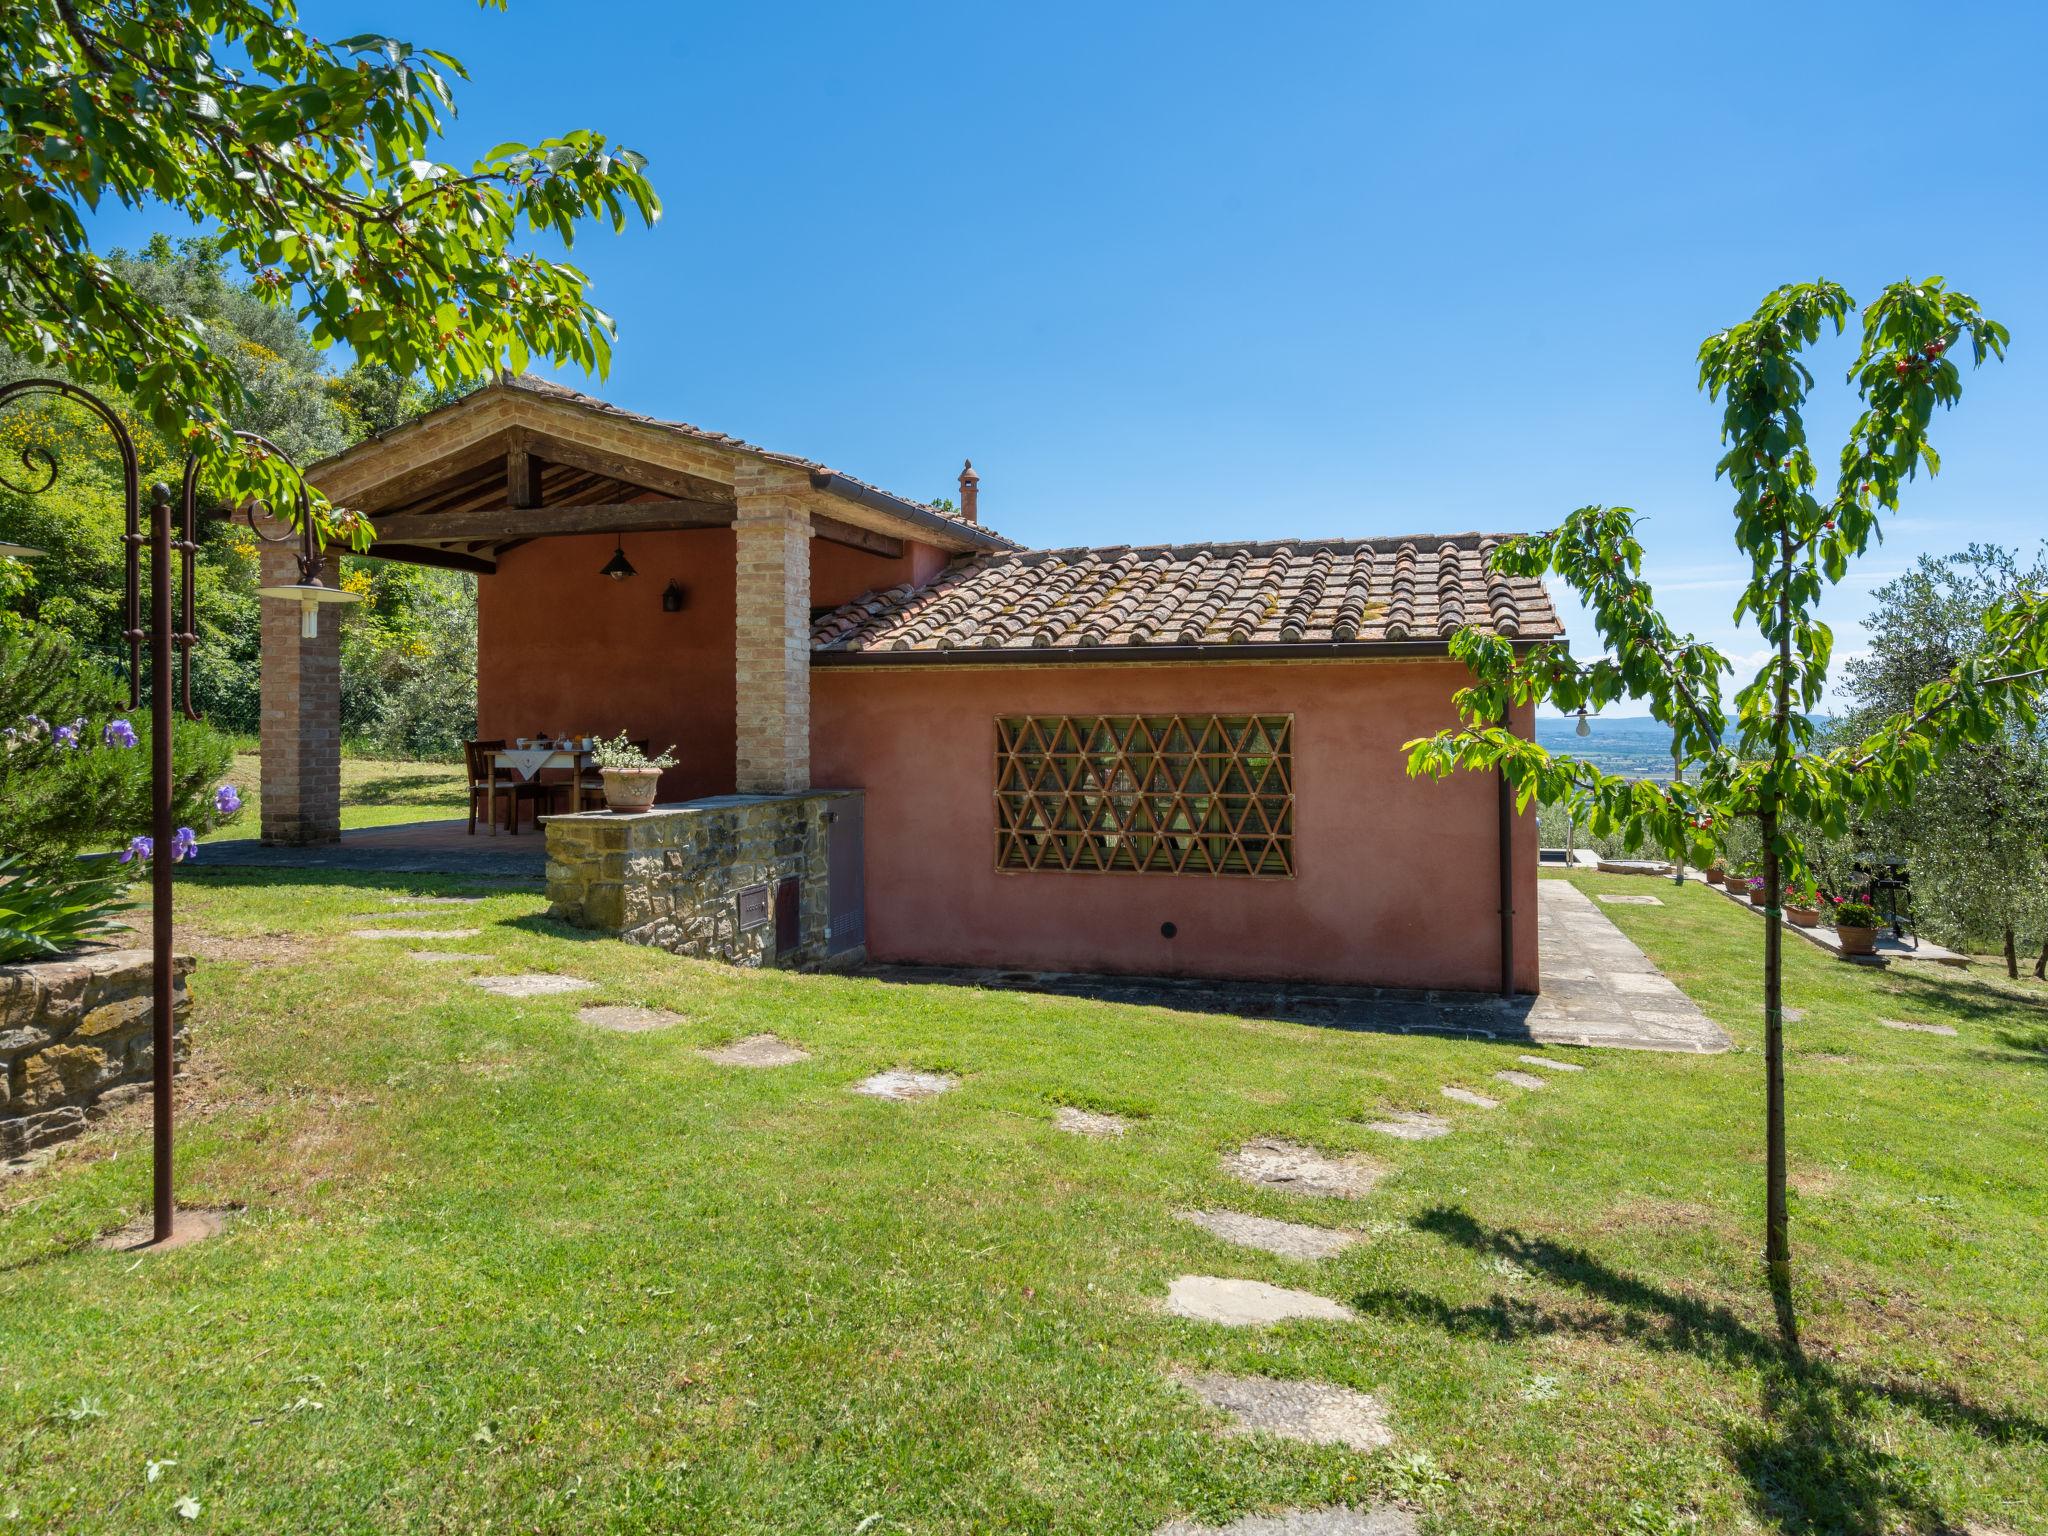 Photo 1 - 1 bedroom House in Castiglion Fiorentino with private pool and garden